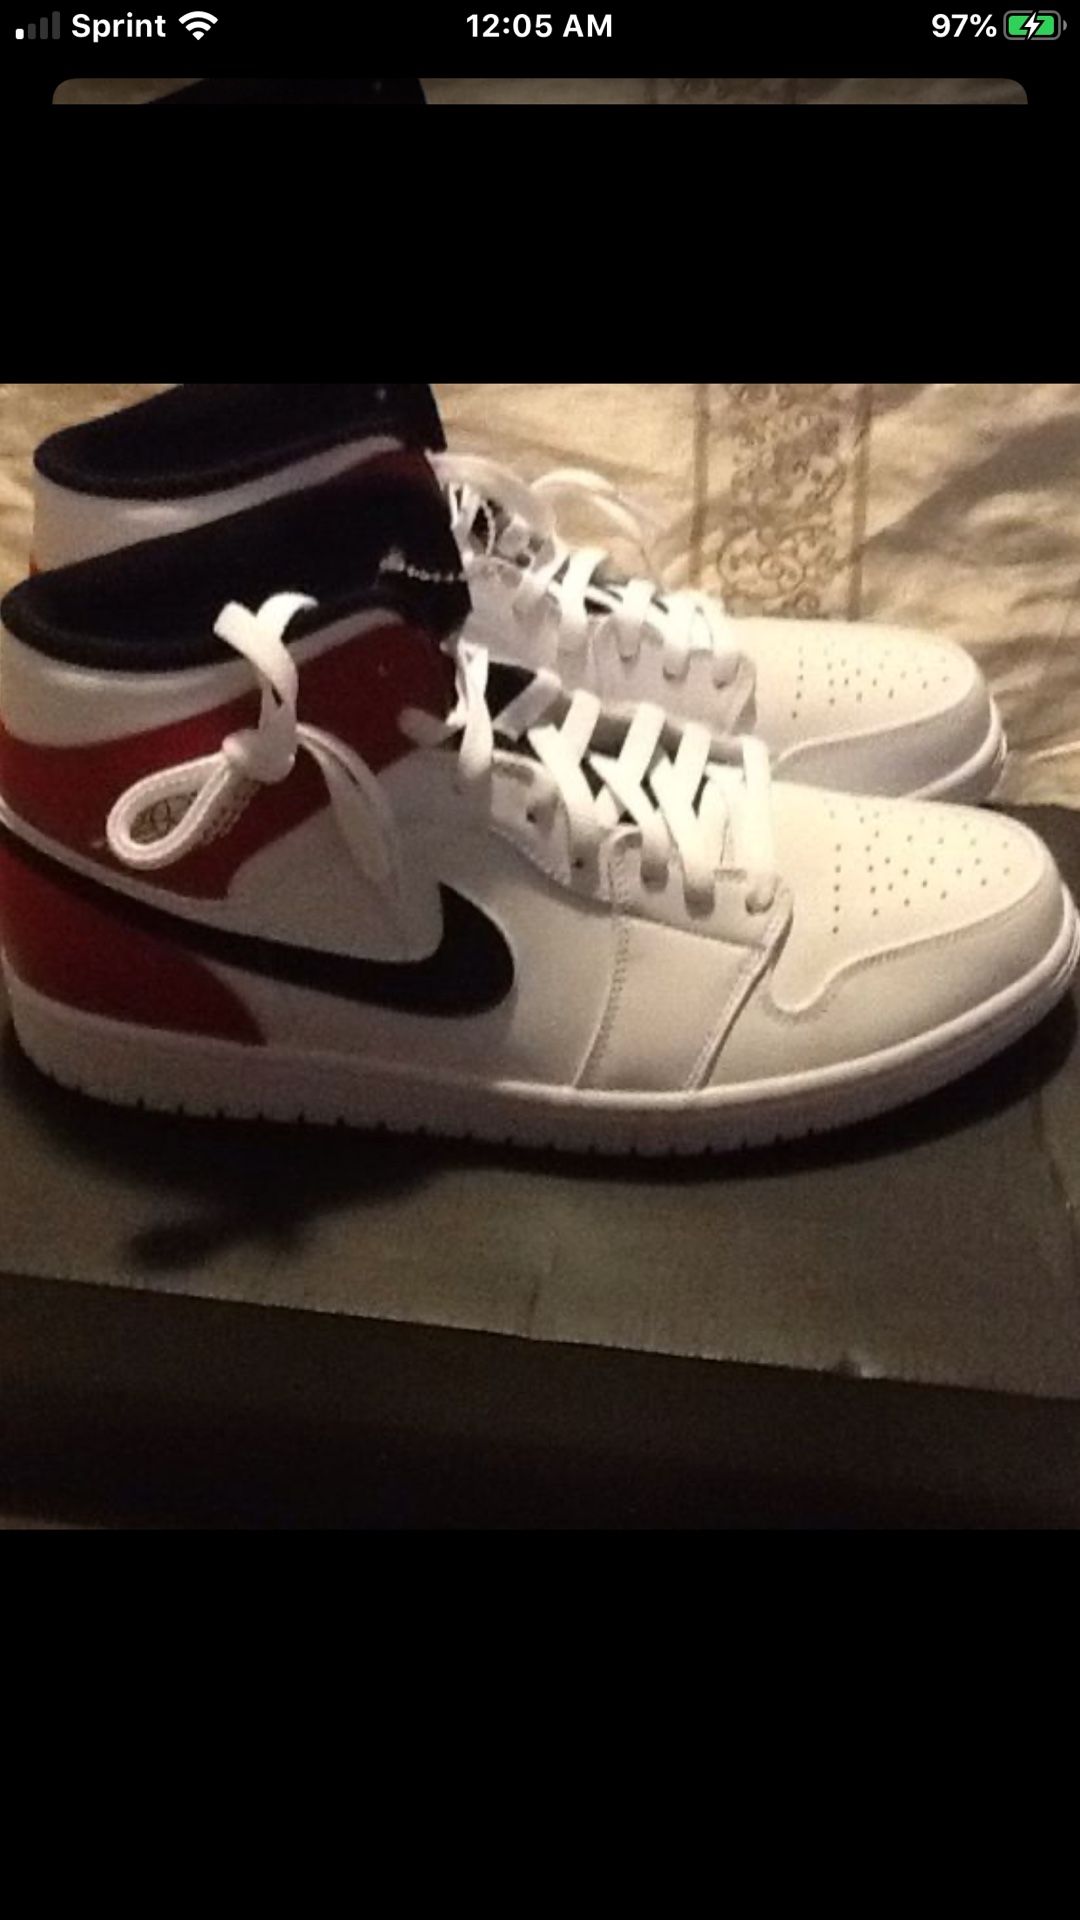 Nike Air Jordan Shoes Size 11.5